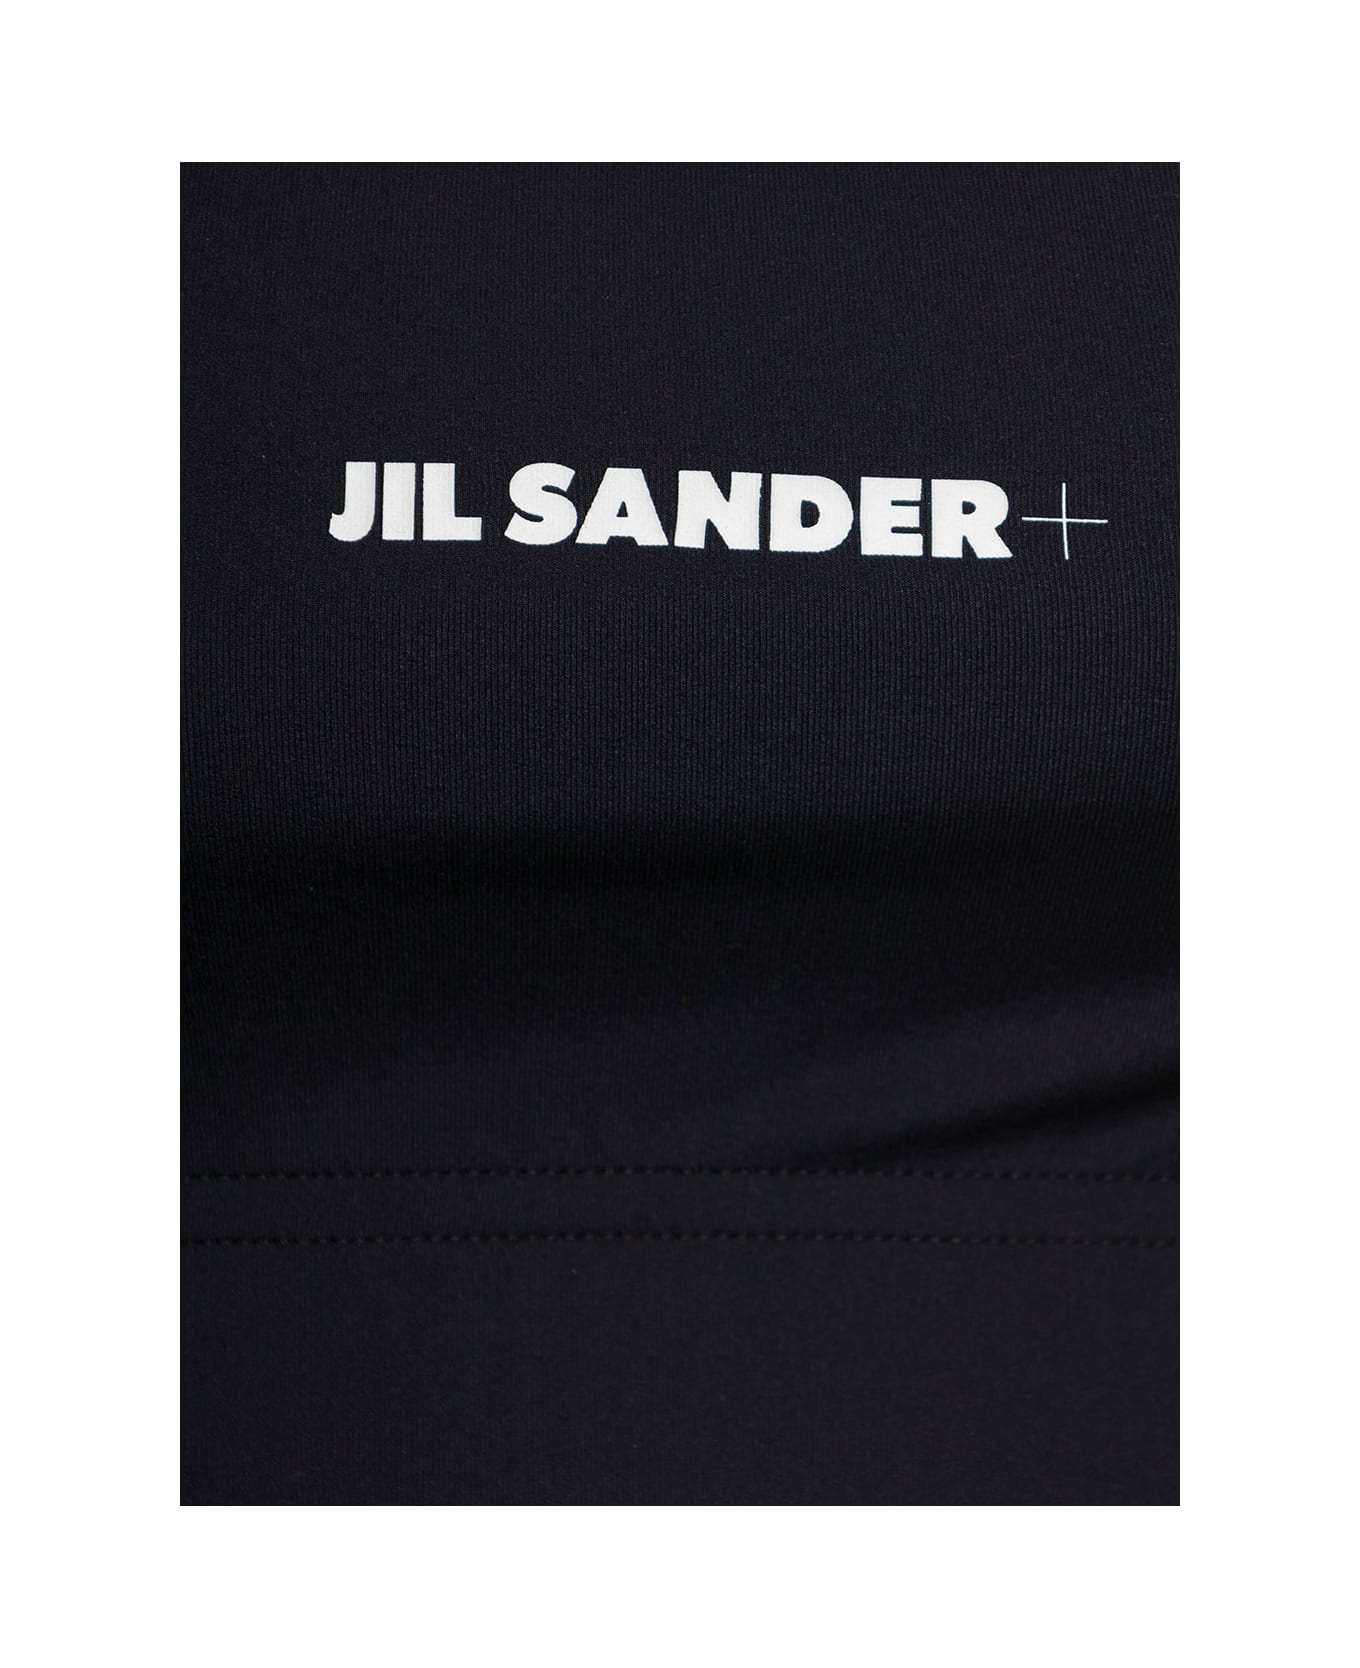 Jil Sander Woman's Blackstretch Fabric Top With Logo - Black